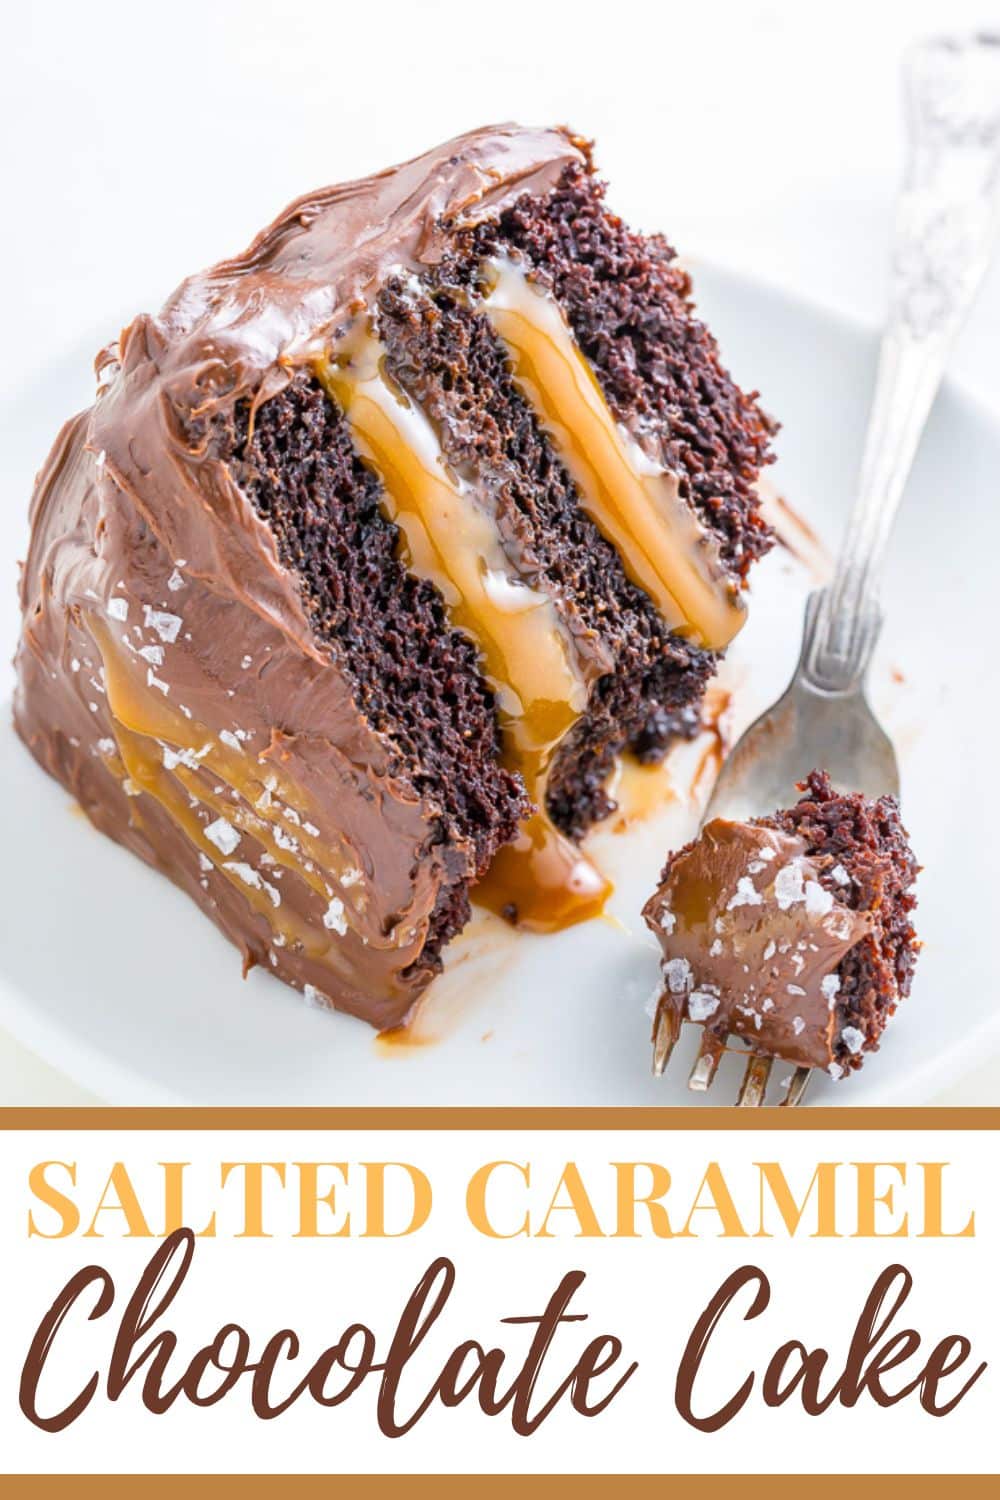 Mariah Carey Partners with Milk Bar on a Double Chocolate Caramel Cake